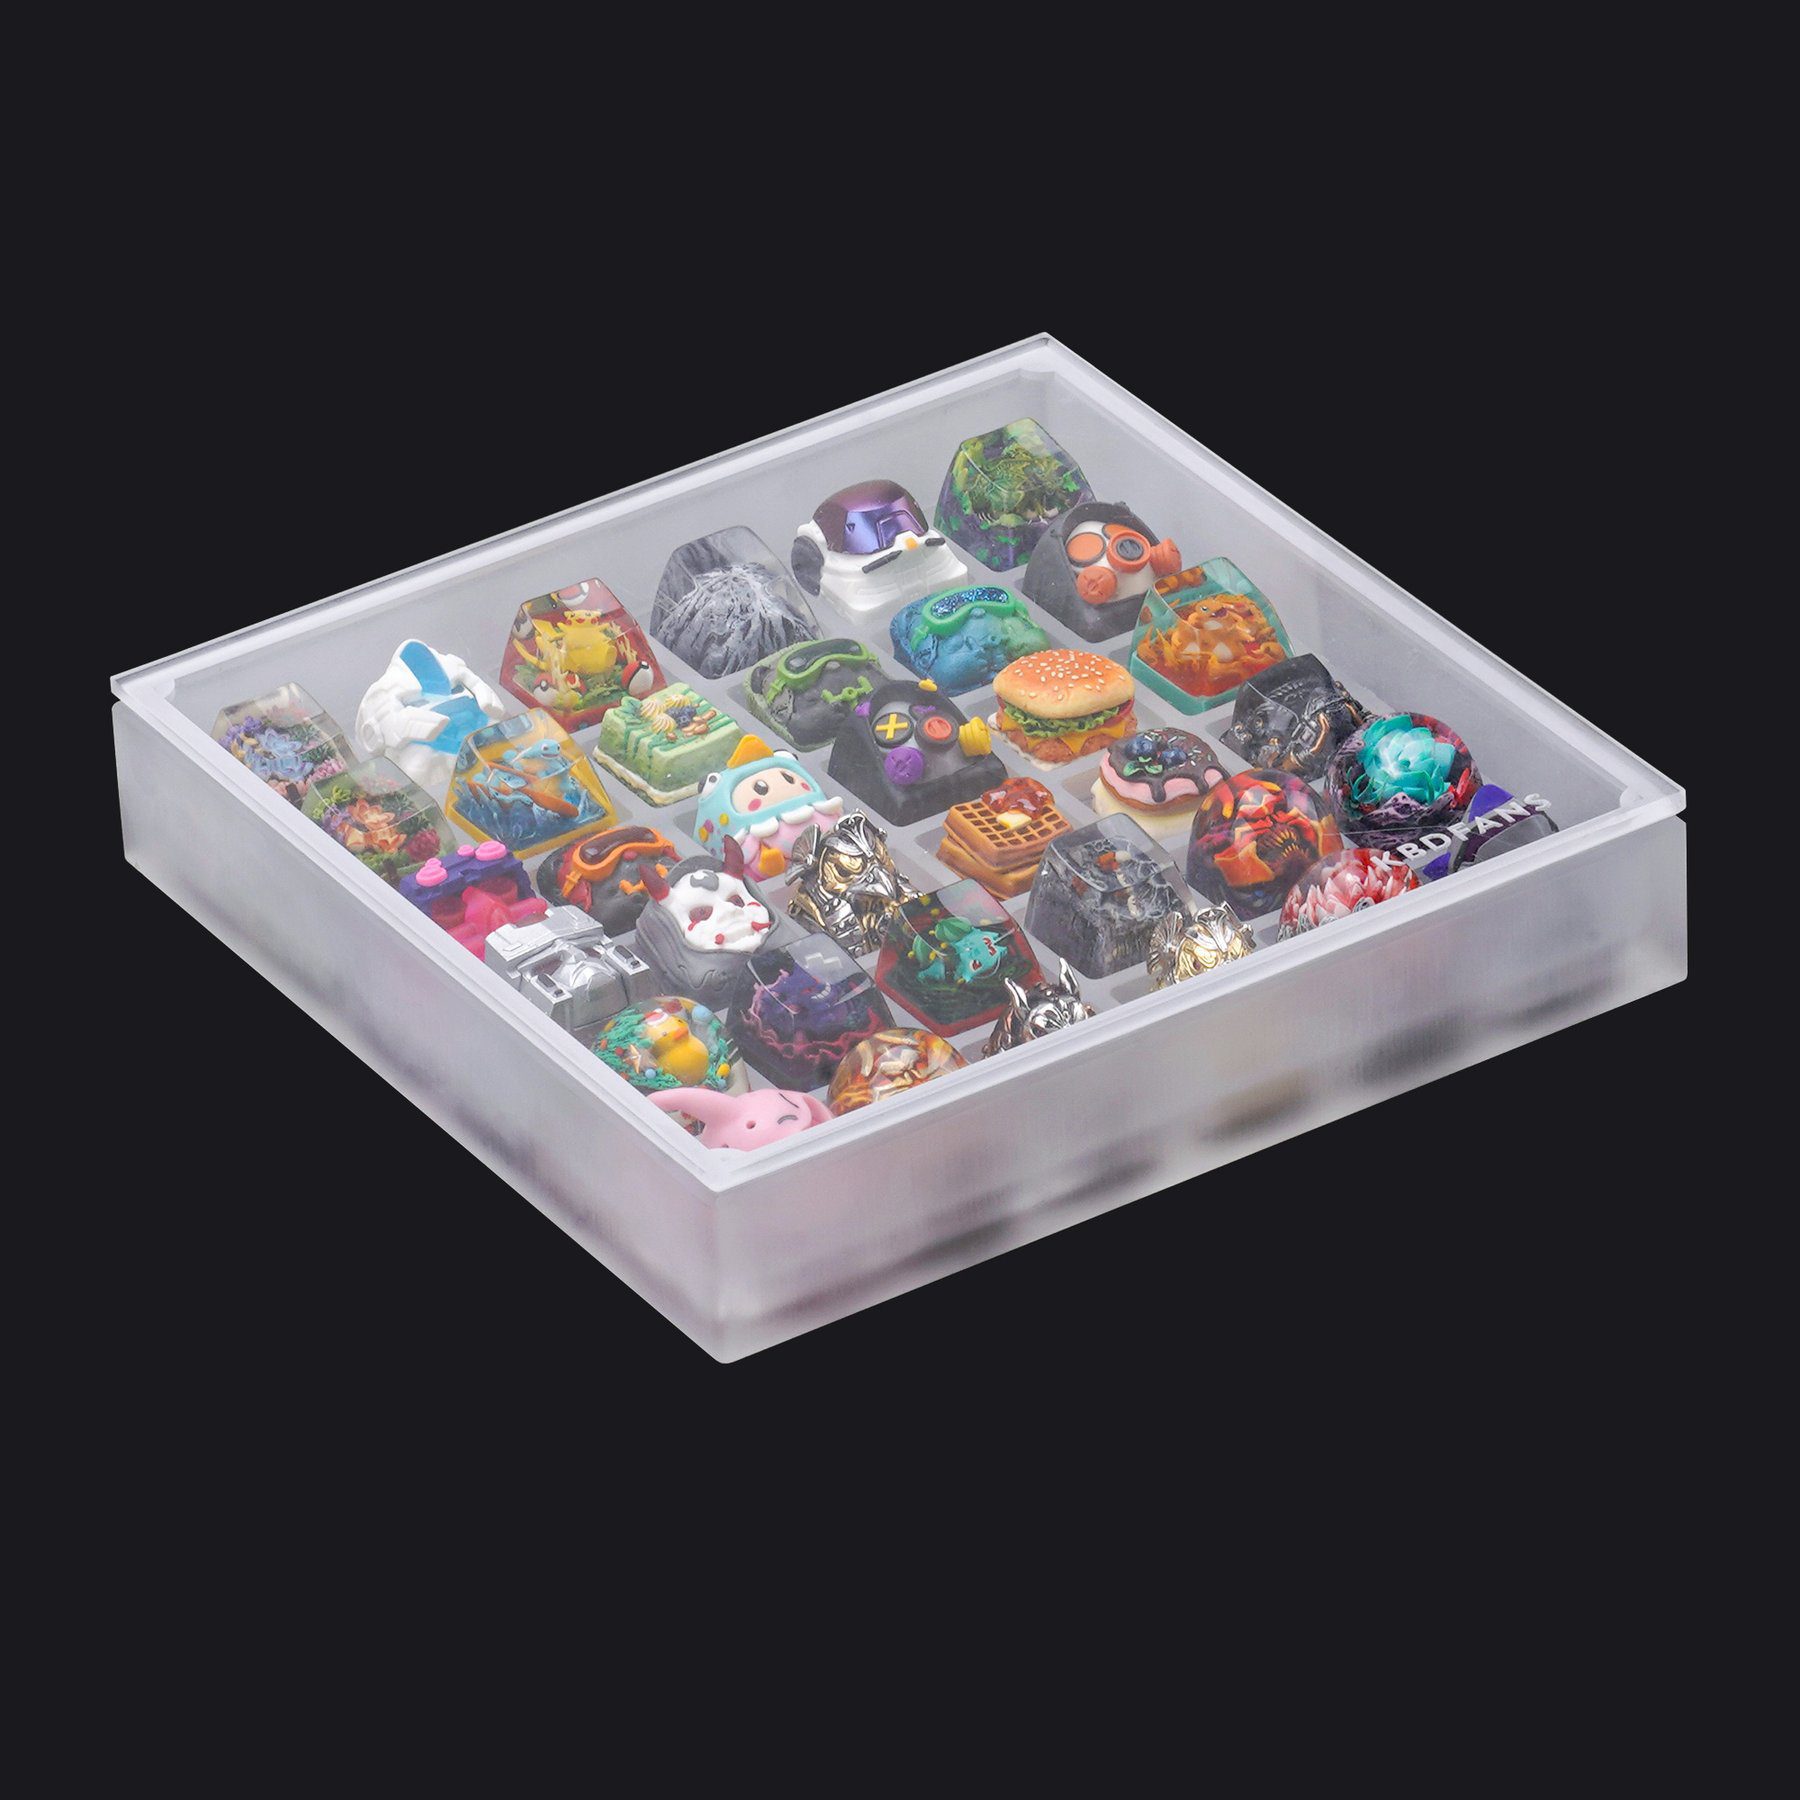 KBDfans Acrylic Keycaps Collector Box